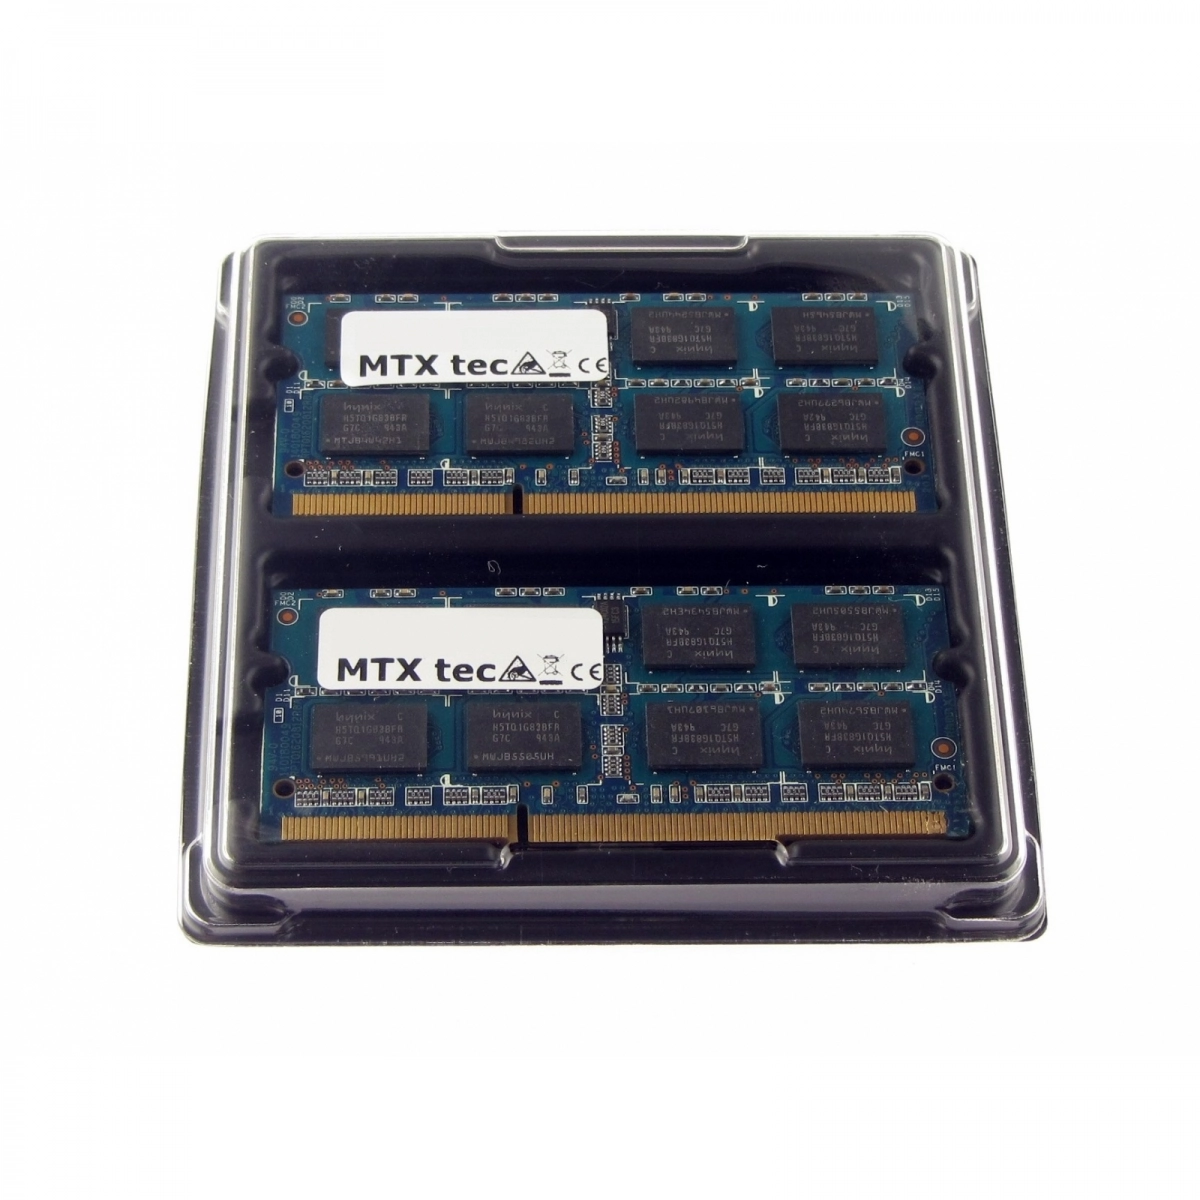 MTXtec 4GB Kit 2x 2GB DDR2 667MHz SODIMM DDR2 PC2-5300, 200 Pin RAM Laptop-Speicher